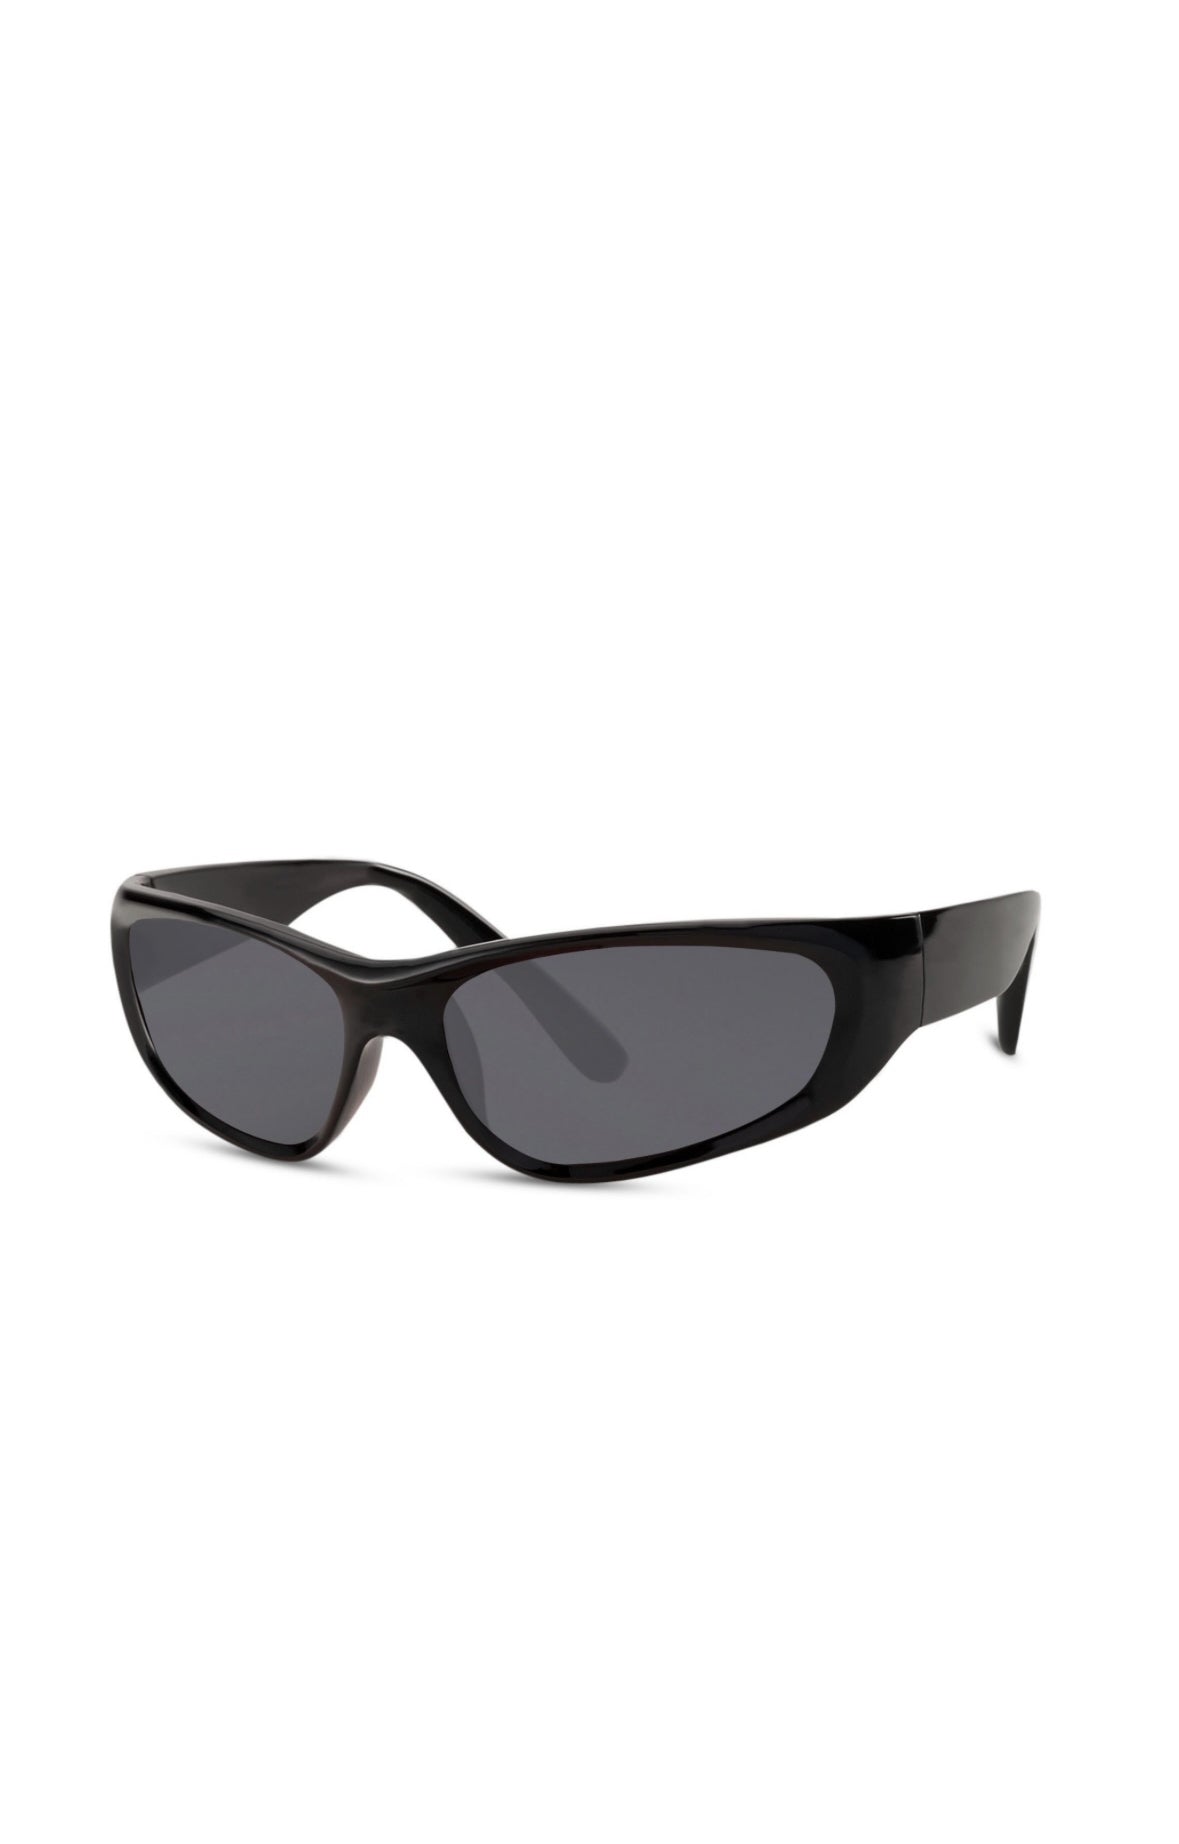 Black “biker” sunglasses